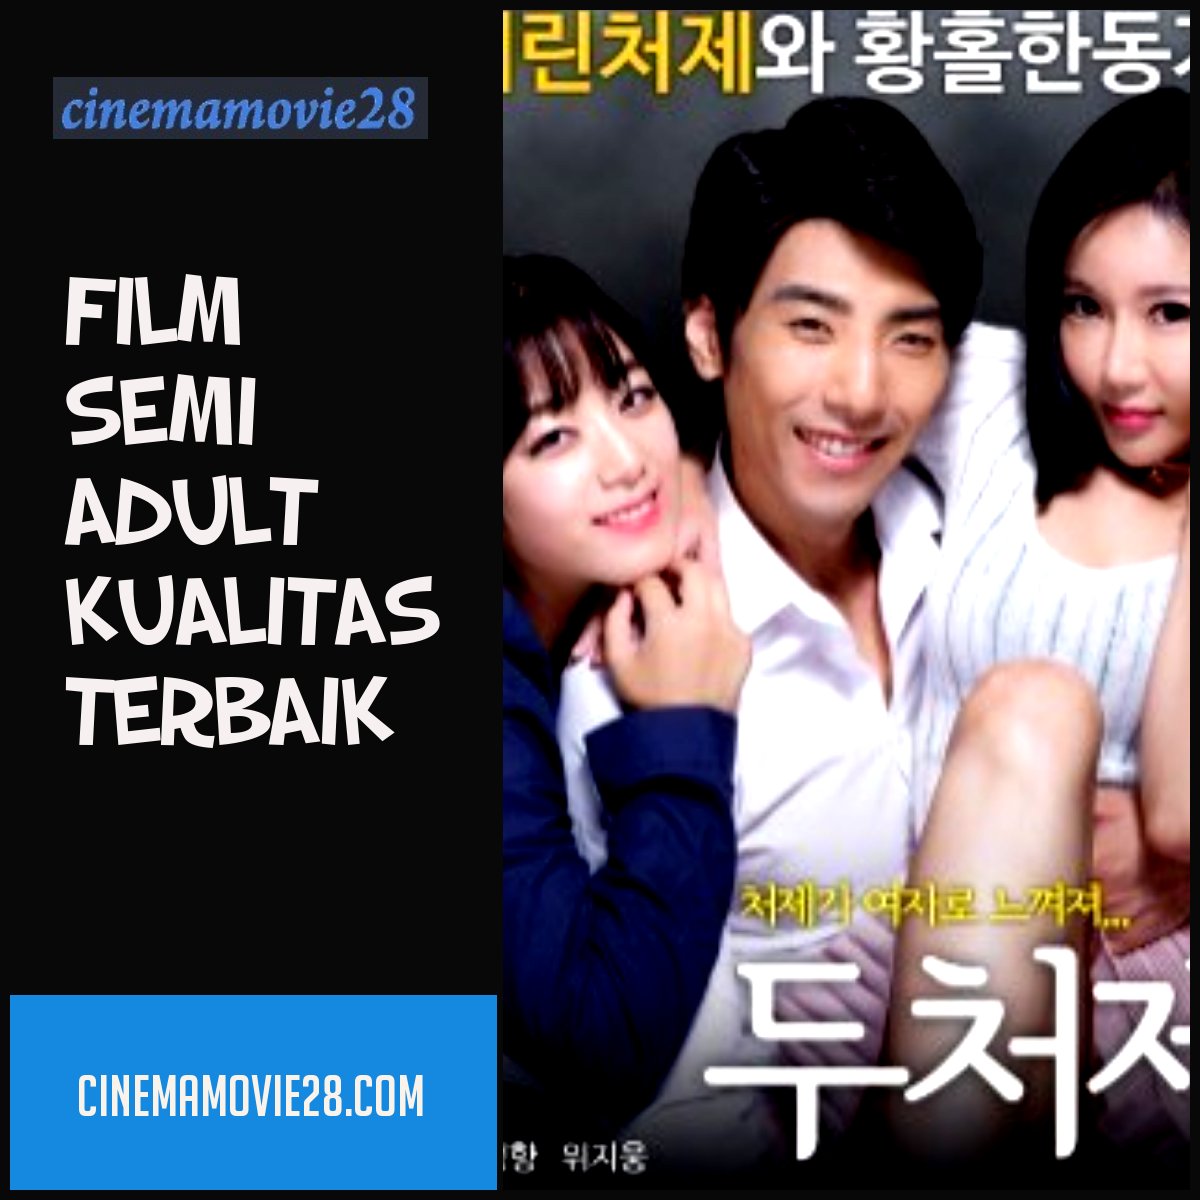 Donwload film semi korea